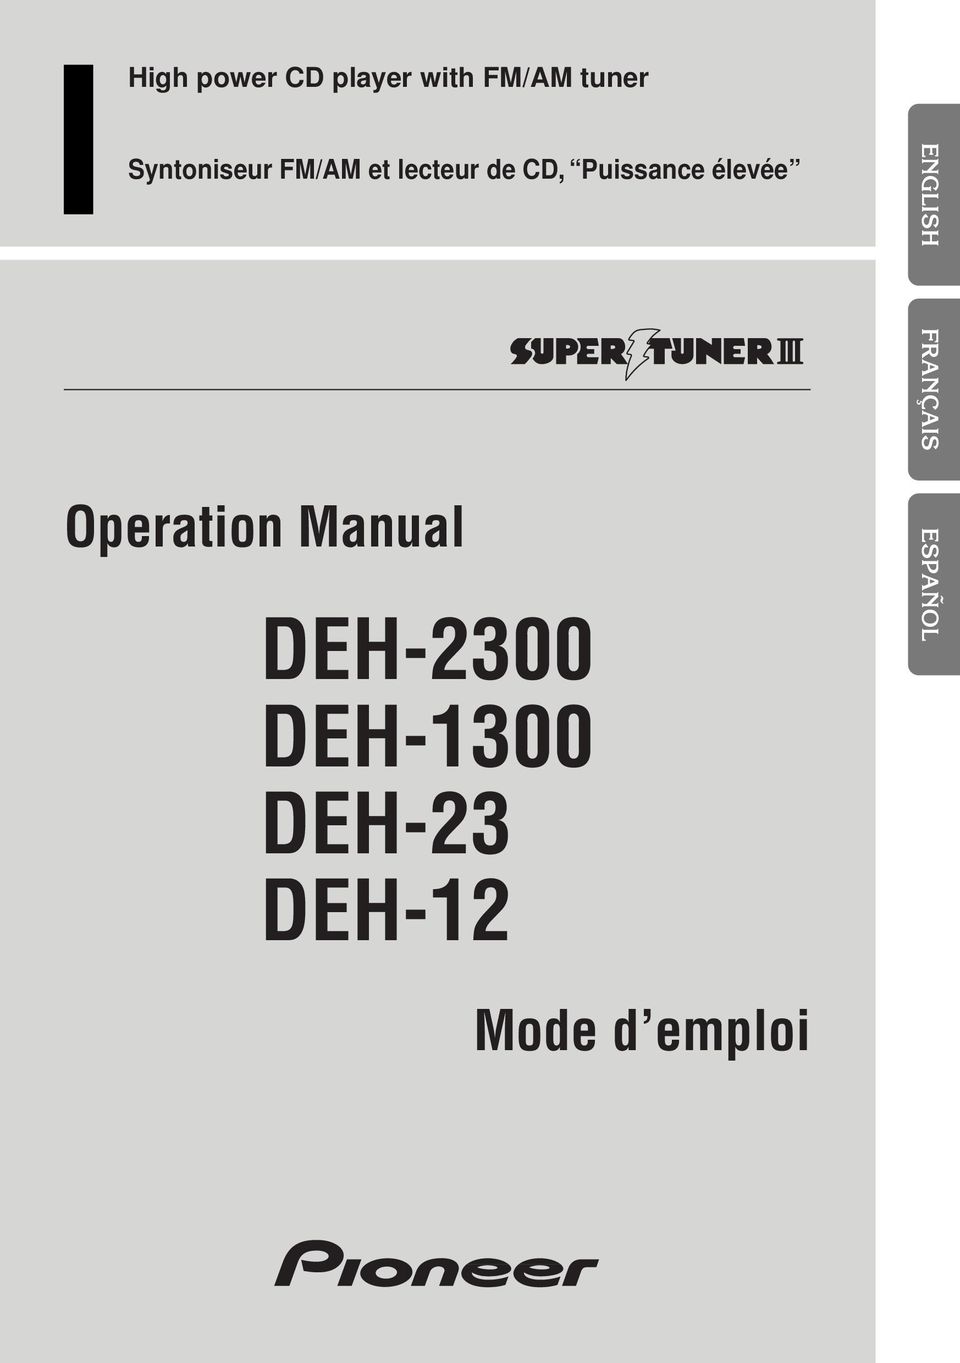 Manual DEH-2300 DEH-1300 DEH-23 DEH-12 Mode d